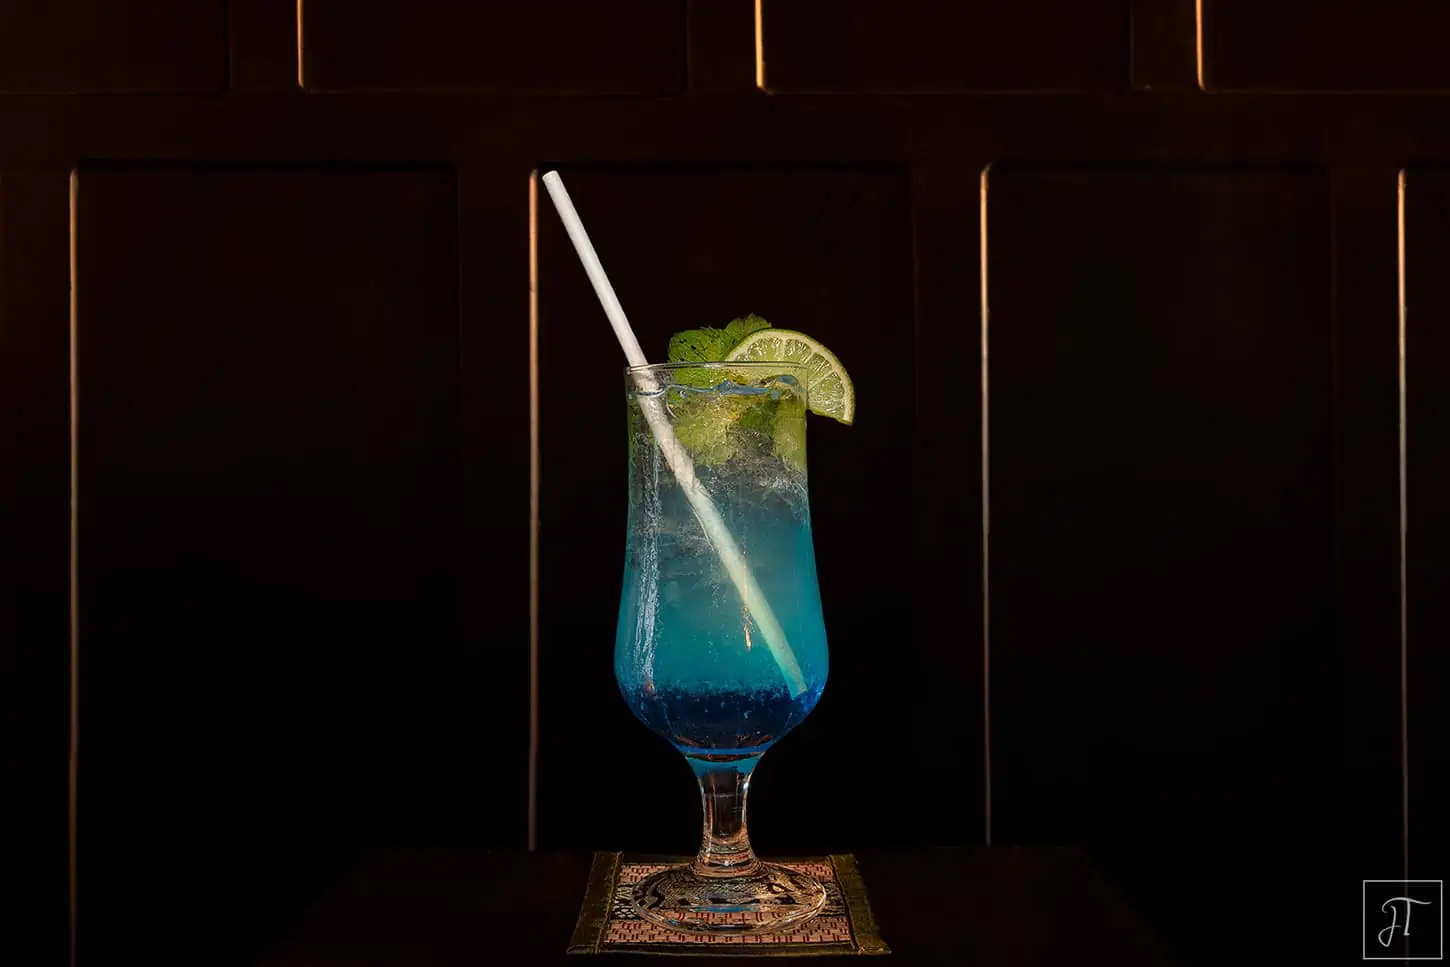 cocktail photograph